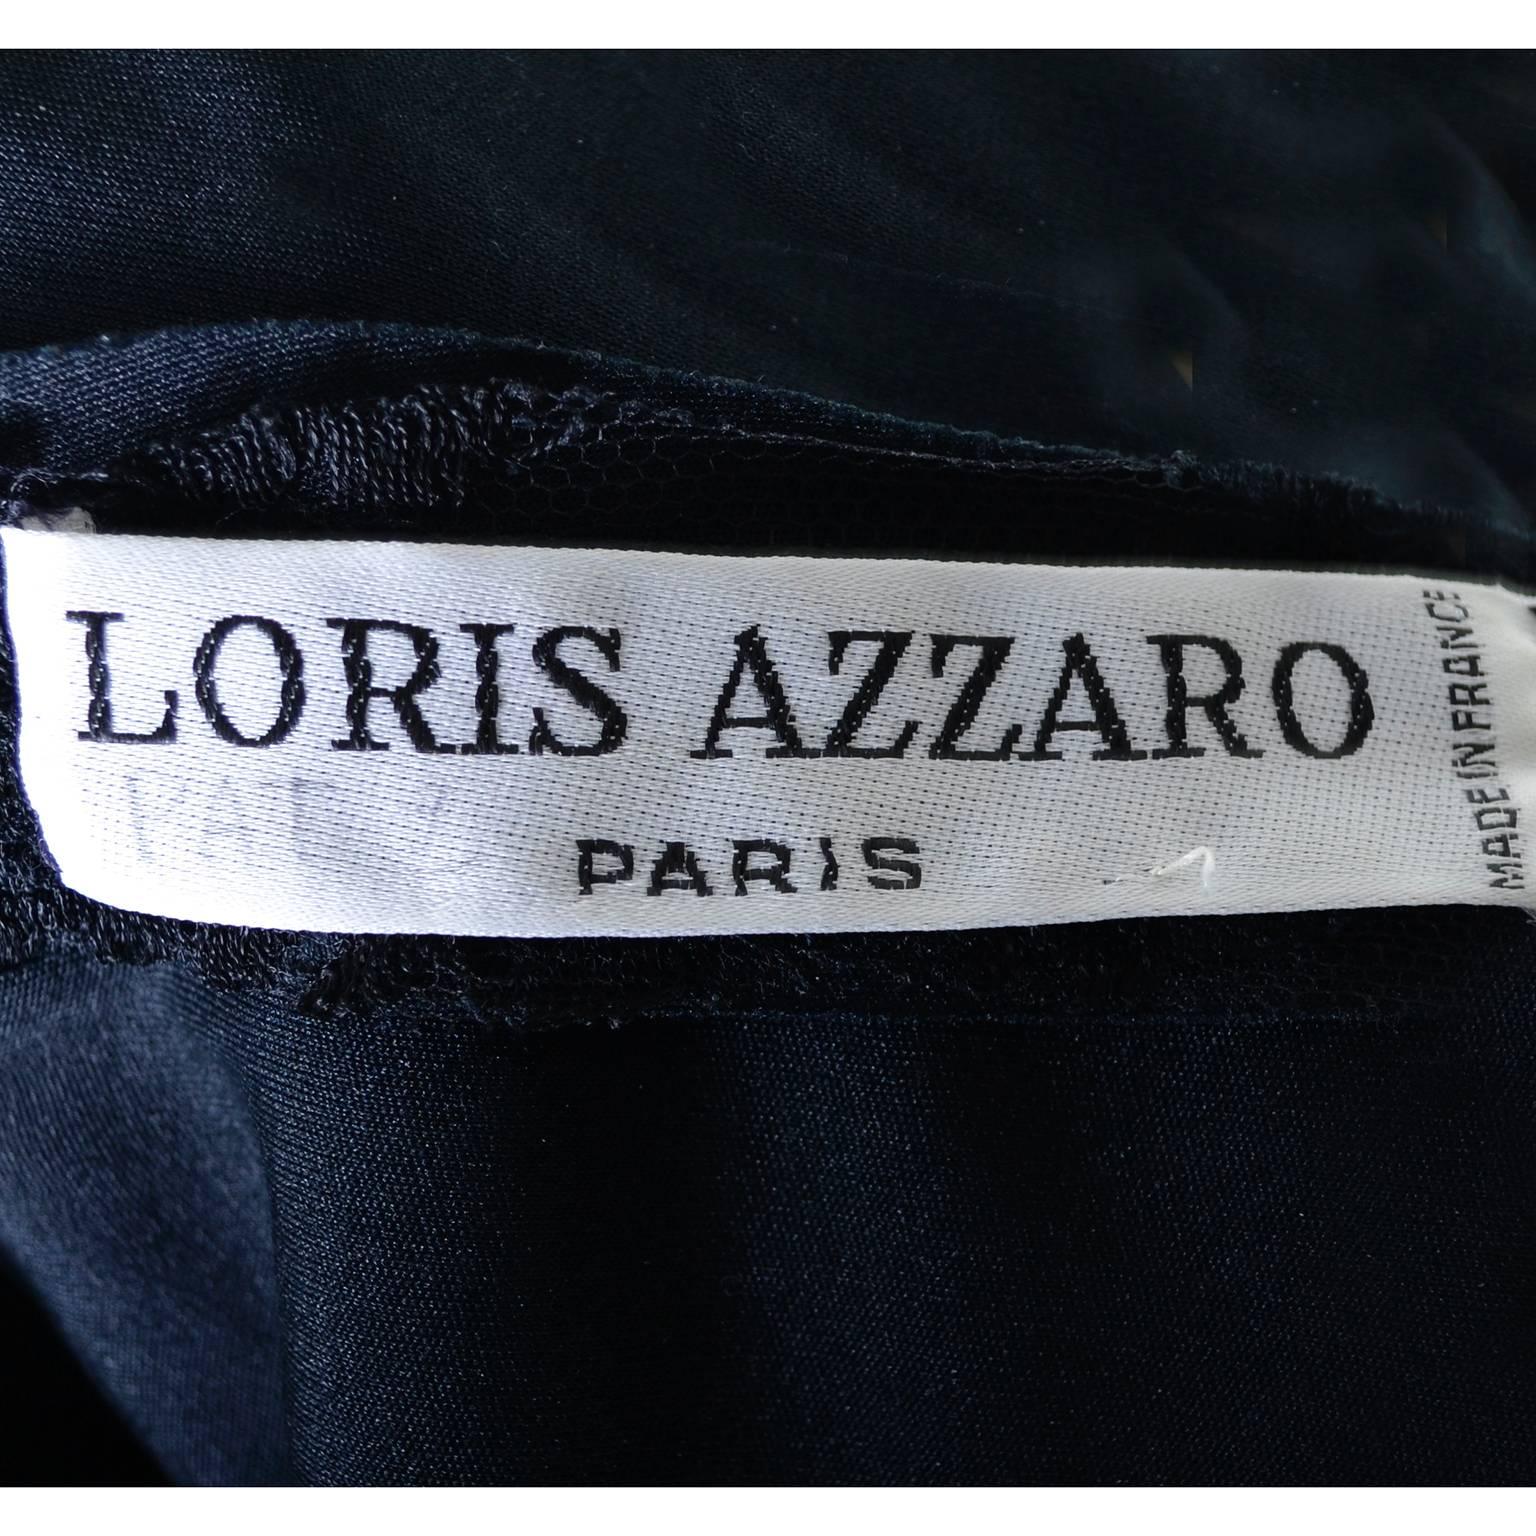 Loris Azzaro Vintage Dress Black Lace Victorian Style 1980s Evening Gown France 3